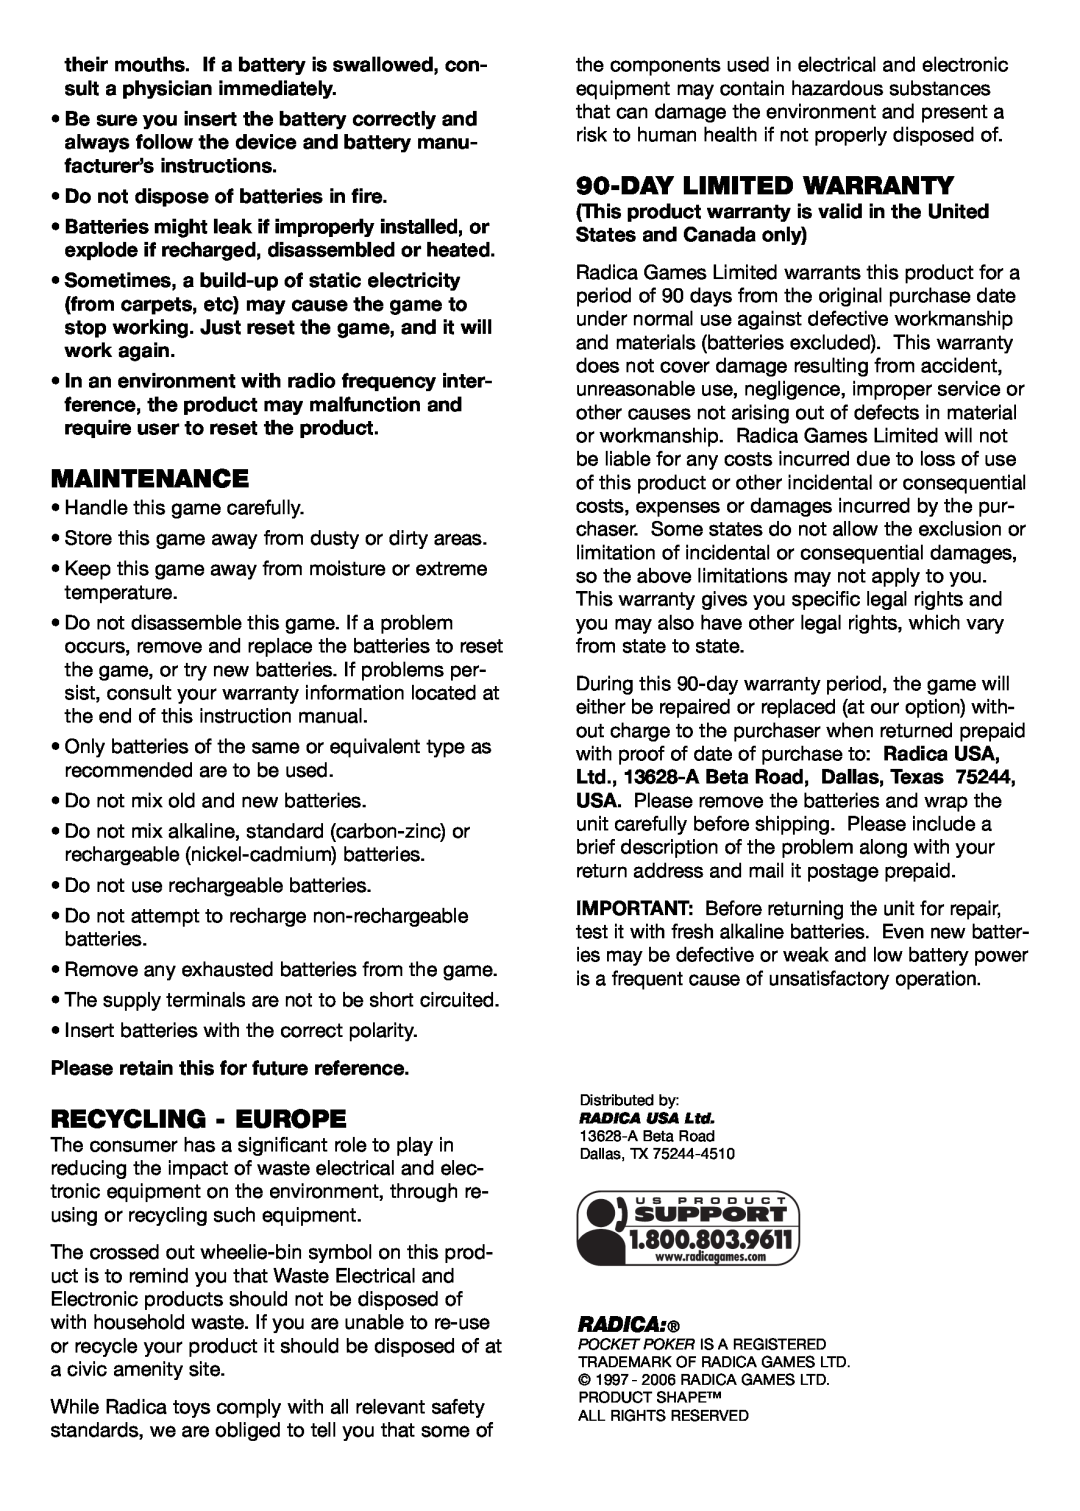 Radica Games I7008 instruction manual Maintenance, Recycling - Europe, Day Limited Warranty, Radica 